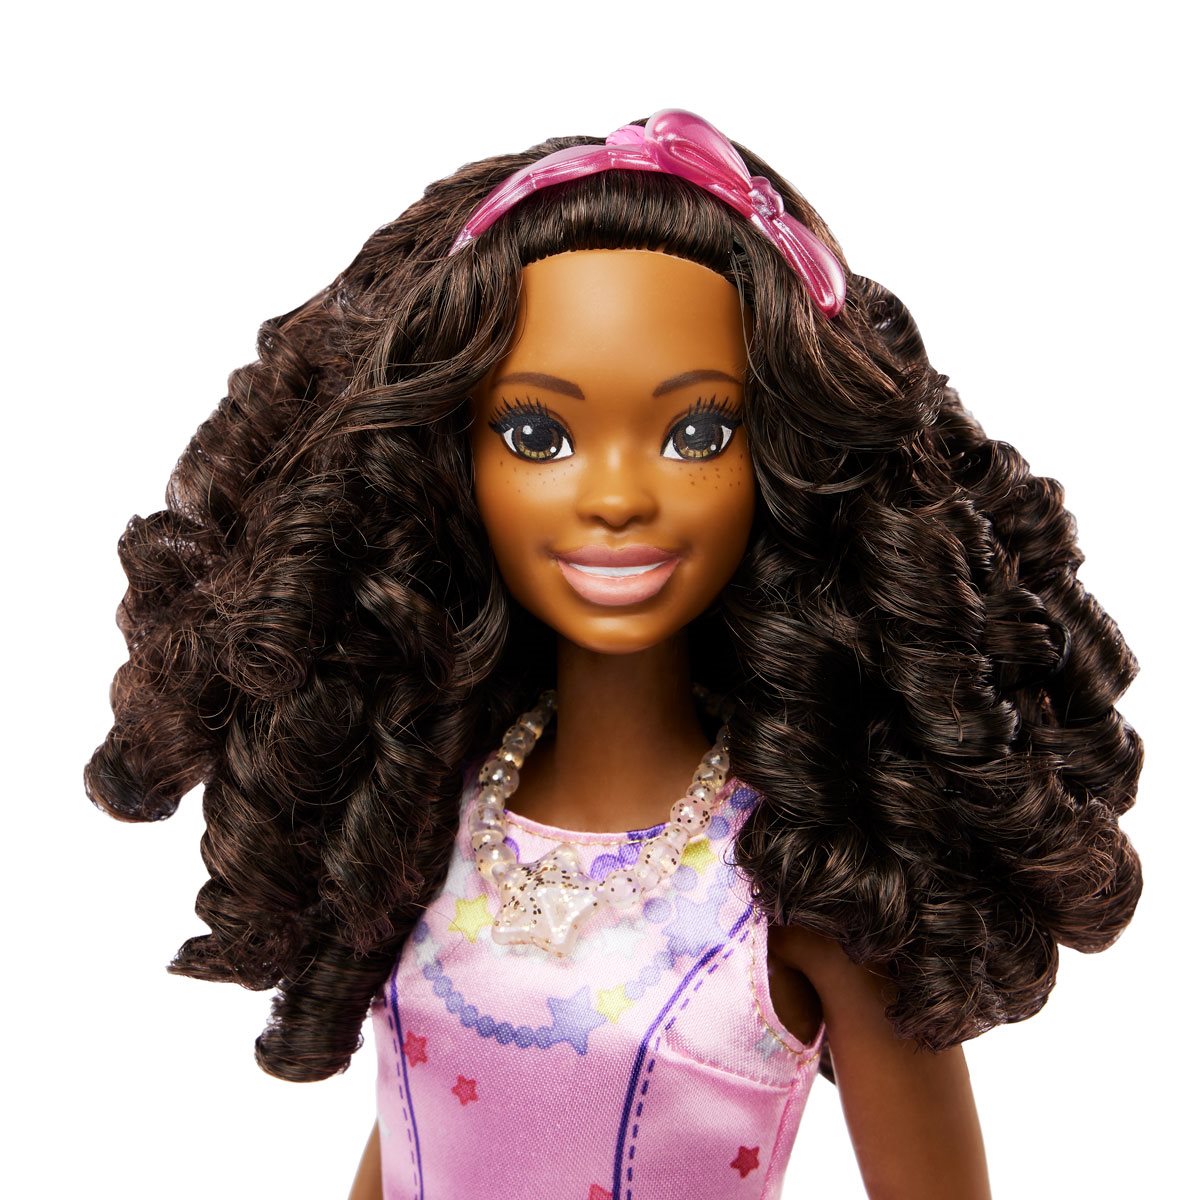 morder Svømmepøl Ingen My First Barbie Deluxe Brooklyn Roberts Doll